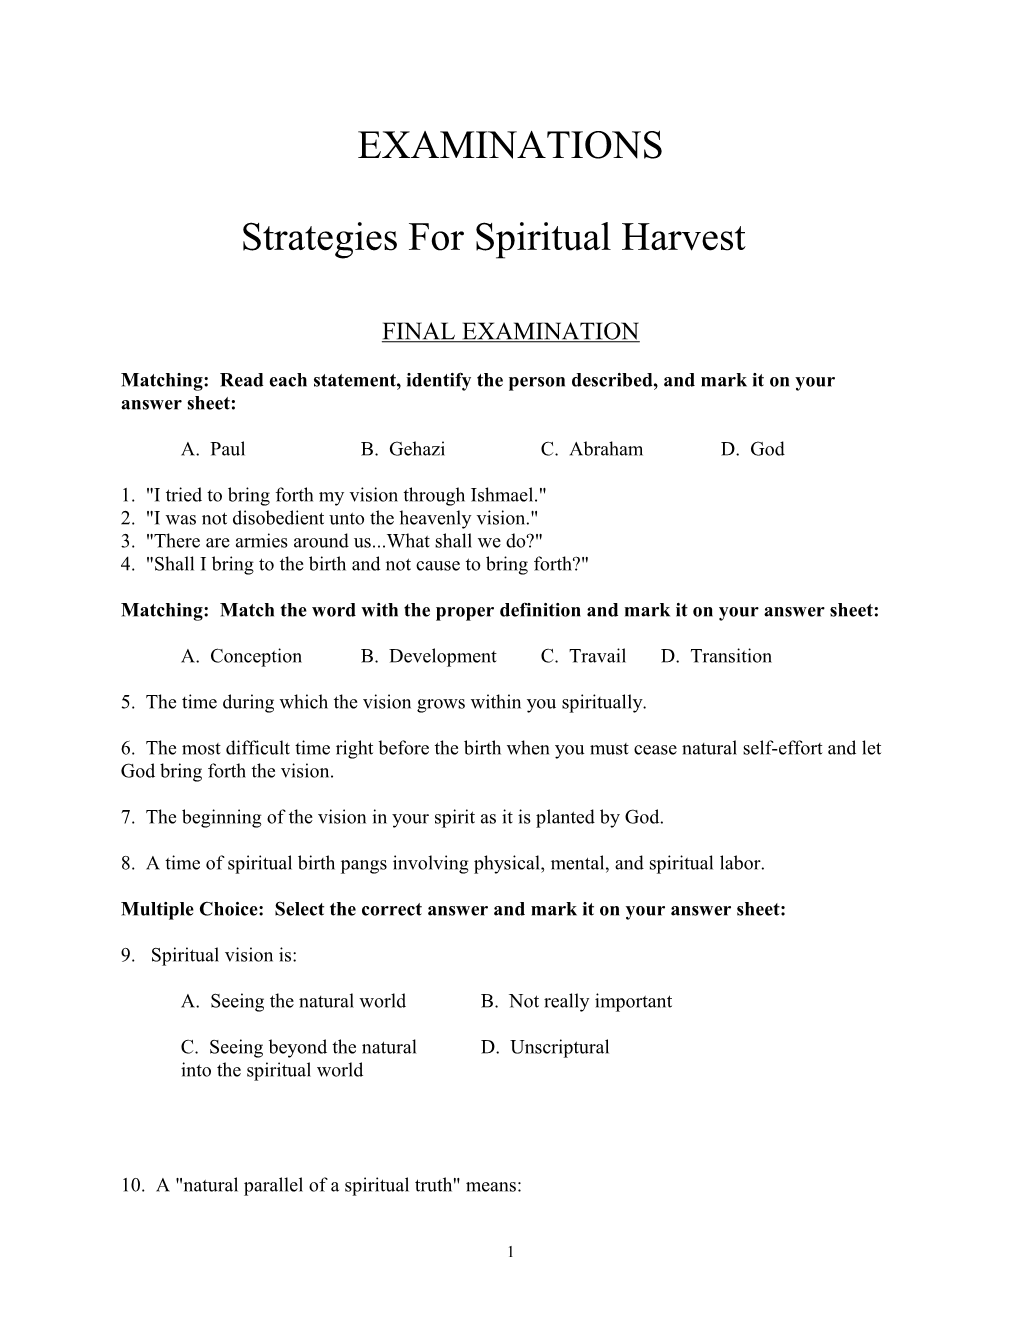 Strategies for Spiritual Harvest